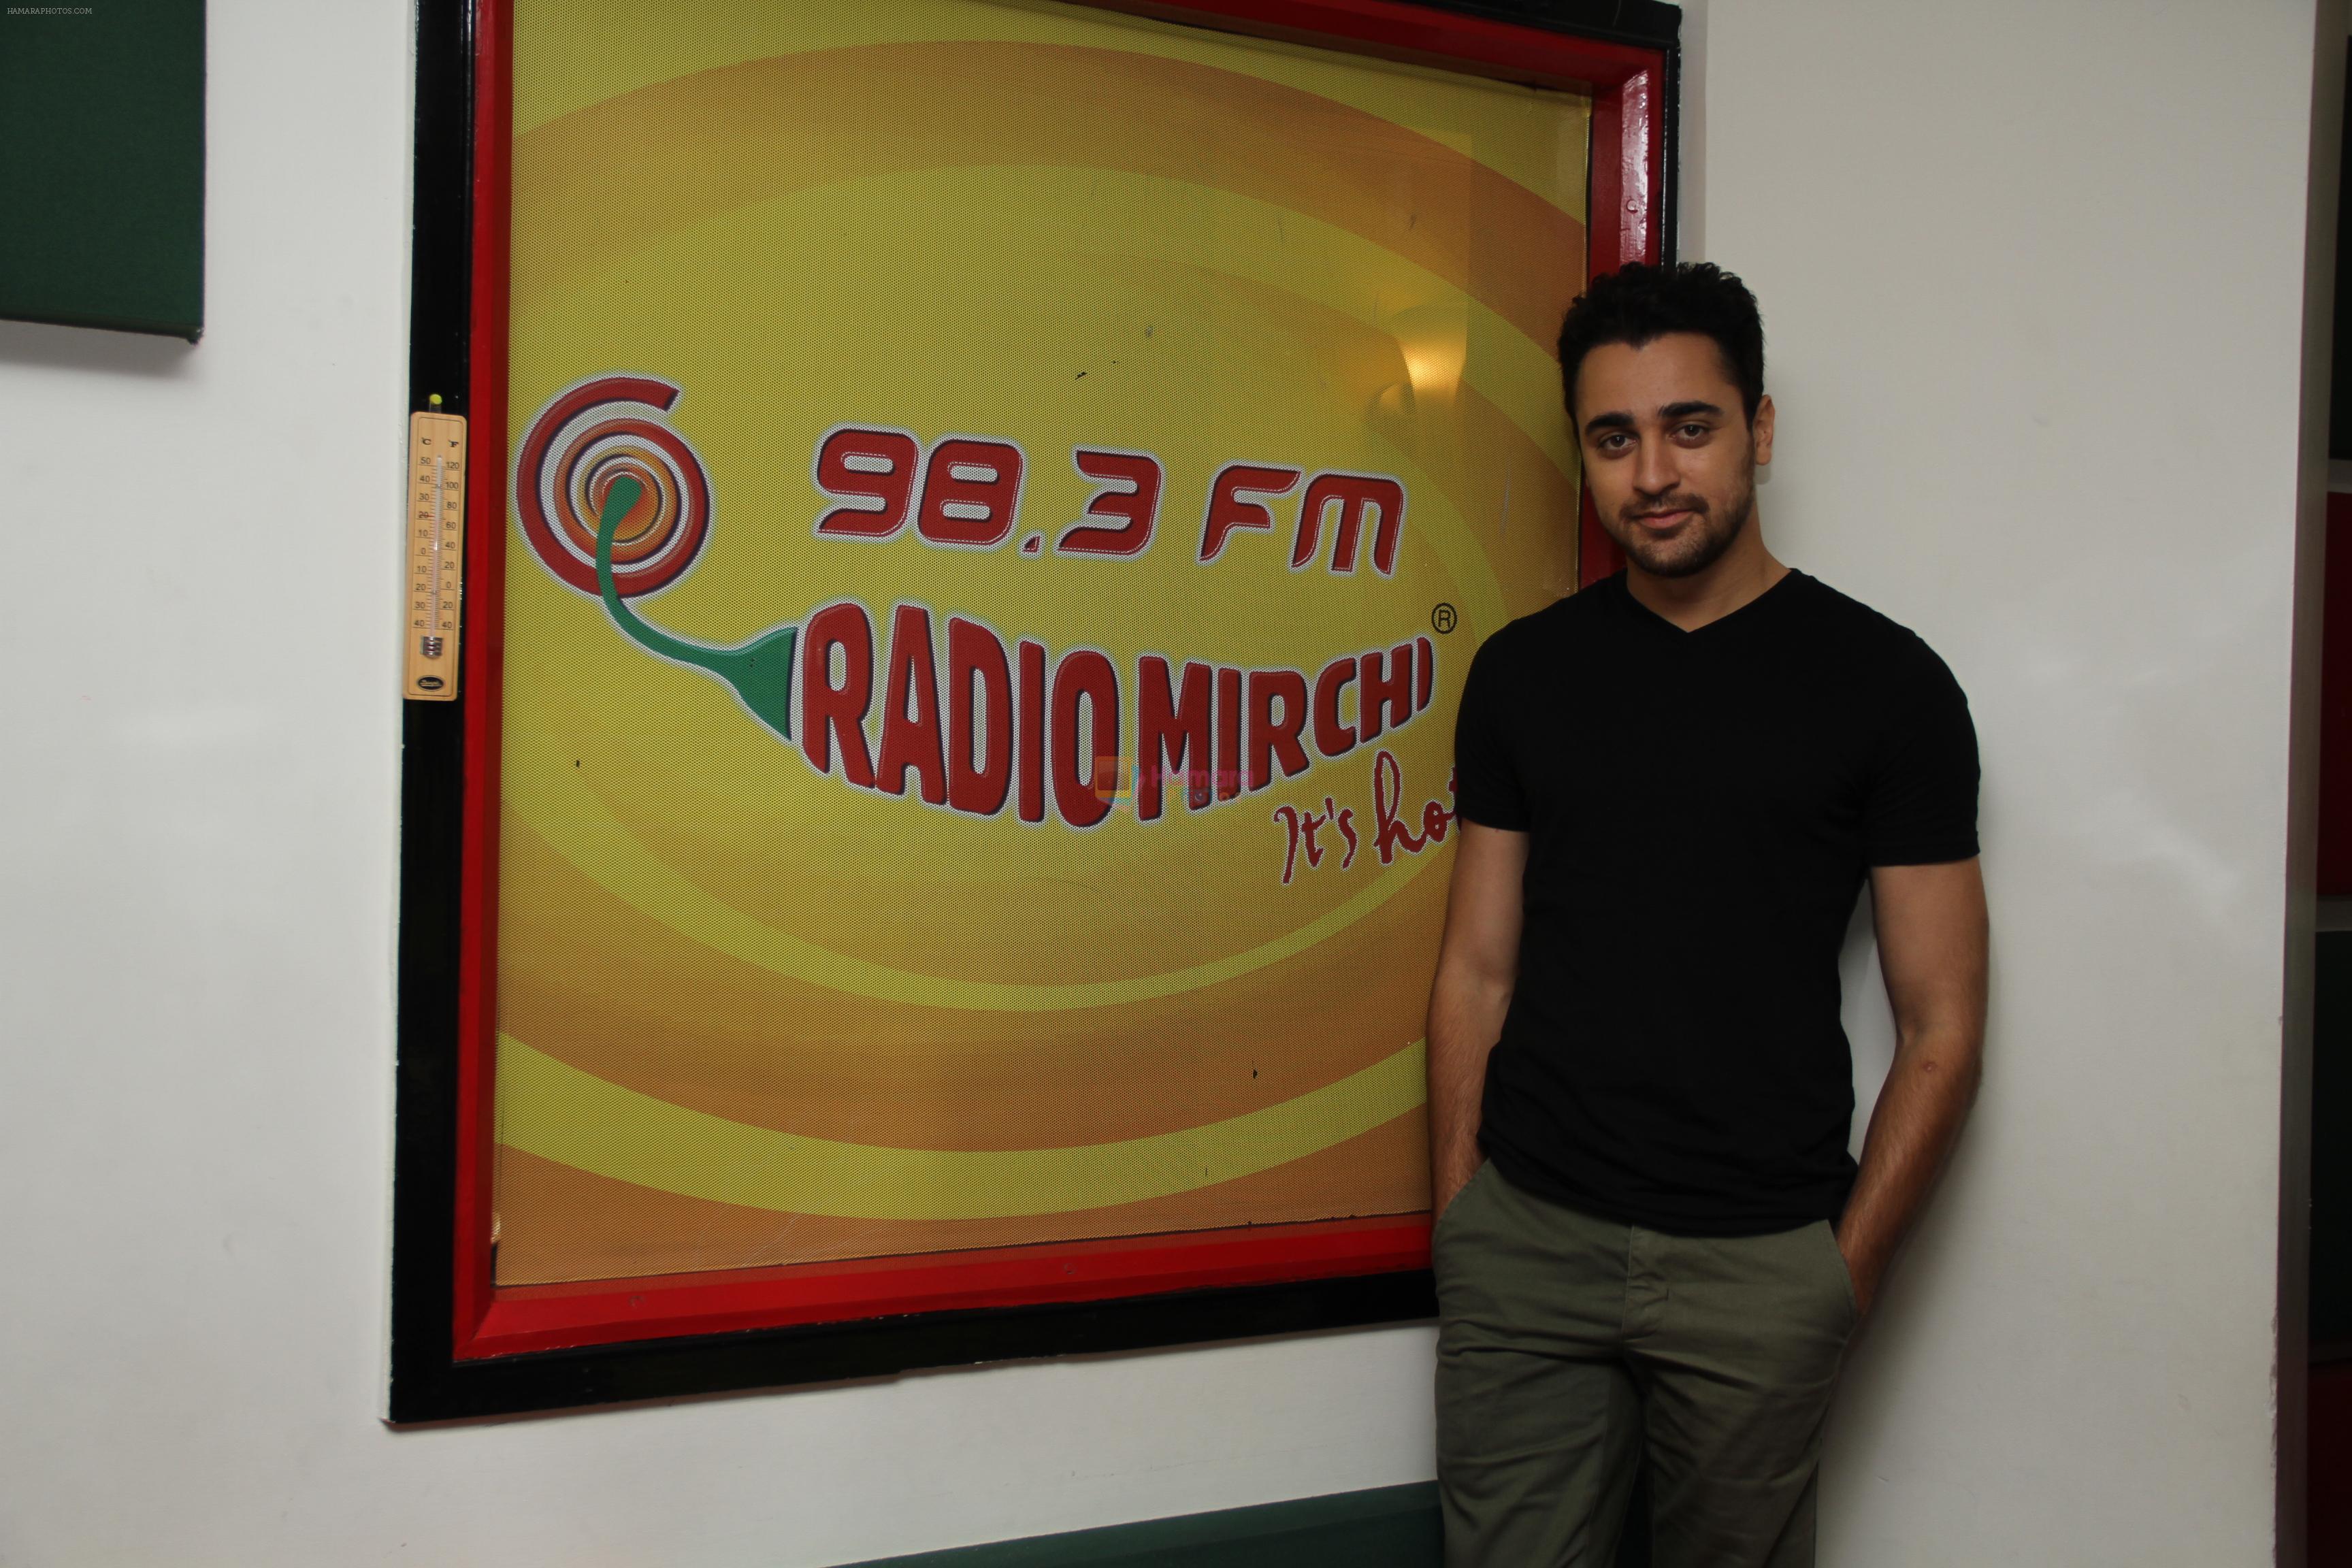 Imran Khan at Radio Mirchi Mumbai studio for promotion of his upcoming movie Once Upon a Time in Mumbai Dobaara!